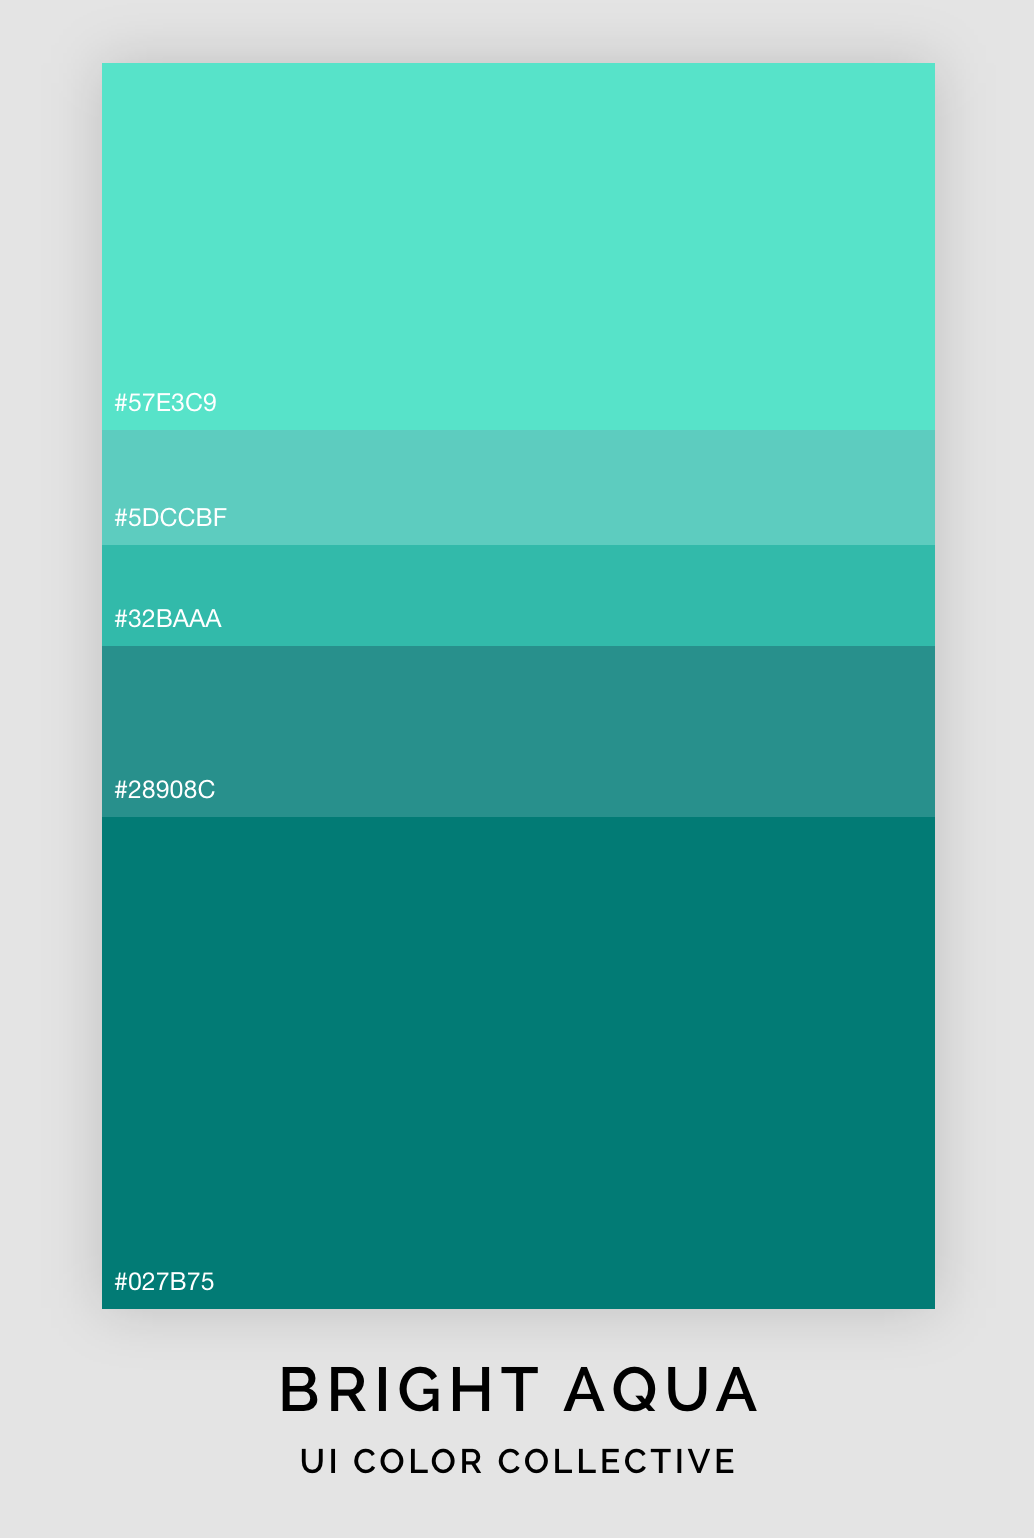 Bright Aqua Color Palette